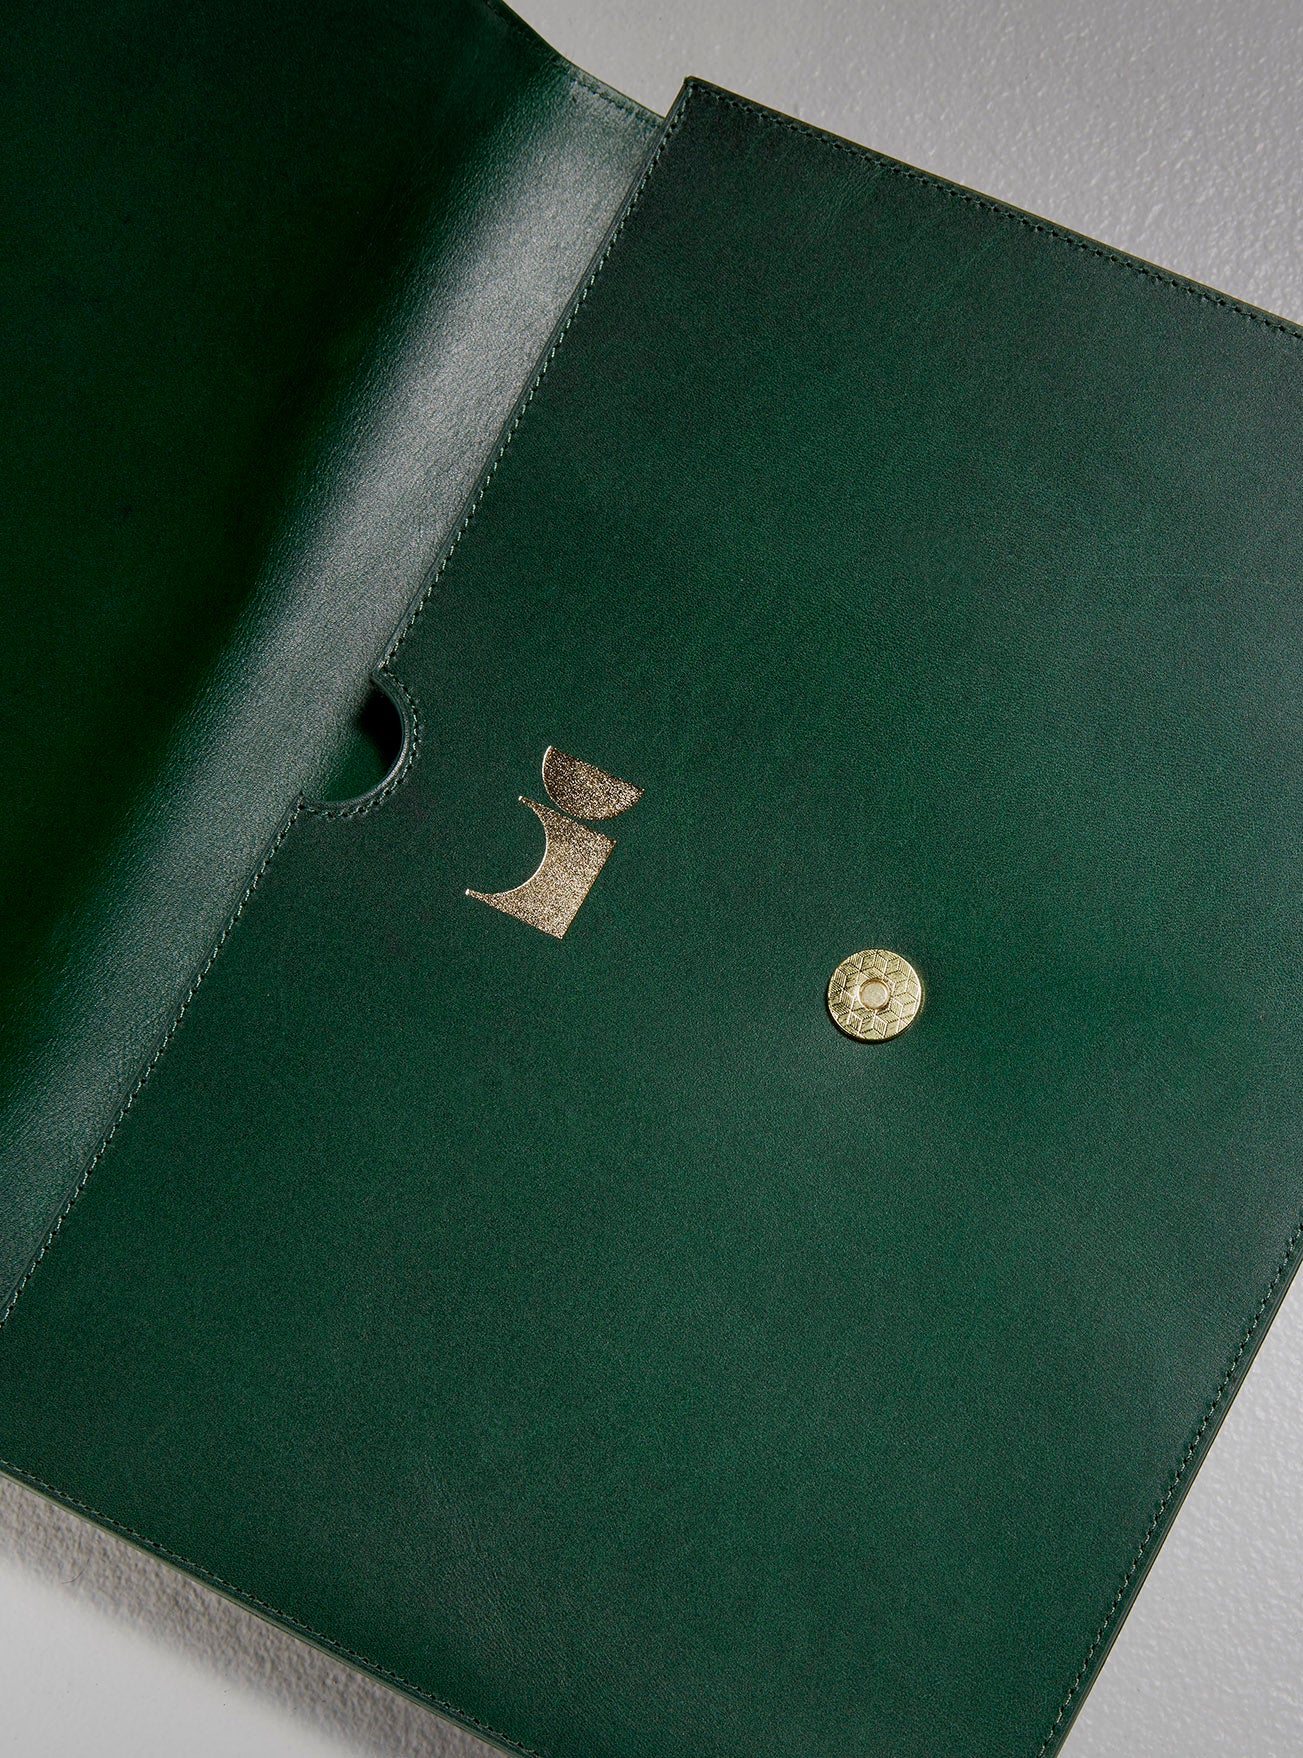 Leather green document folio unbuttoned